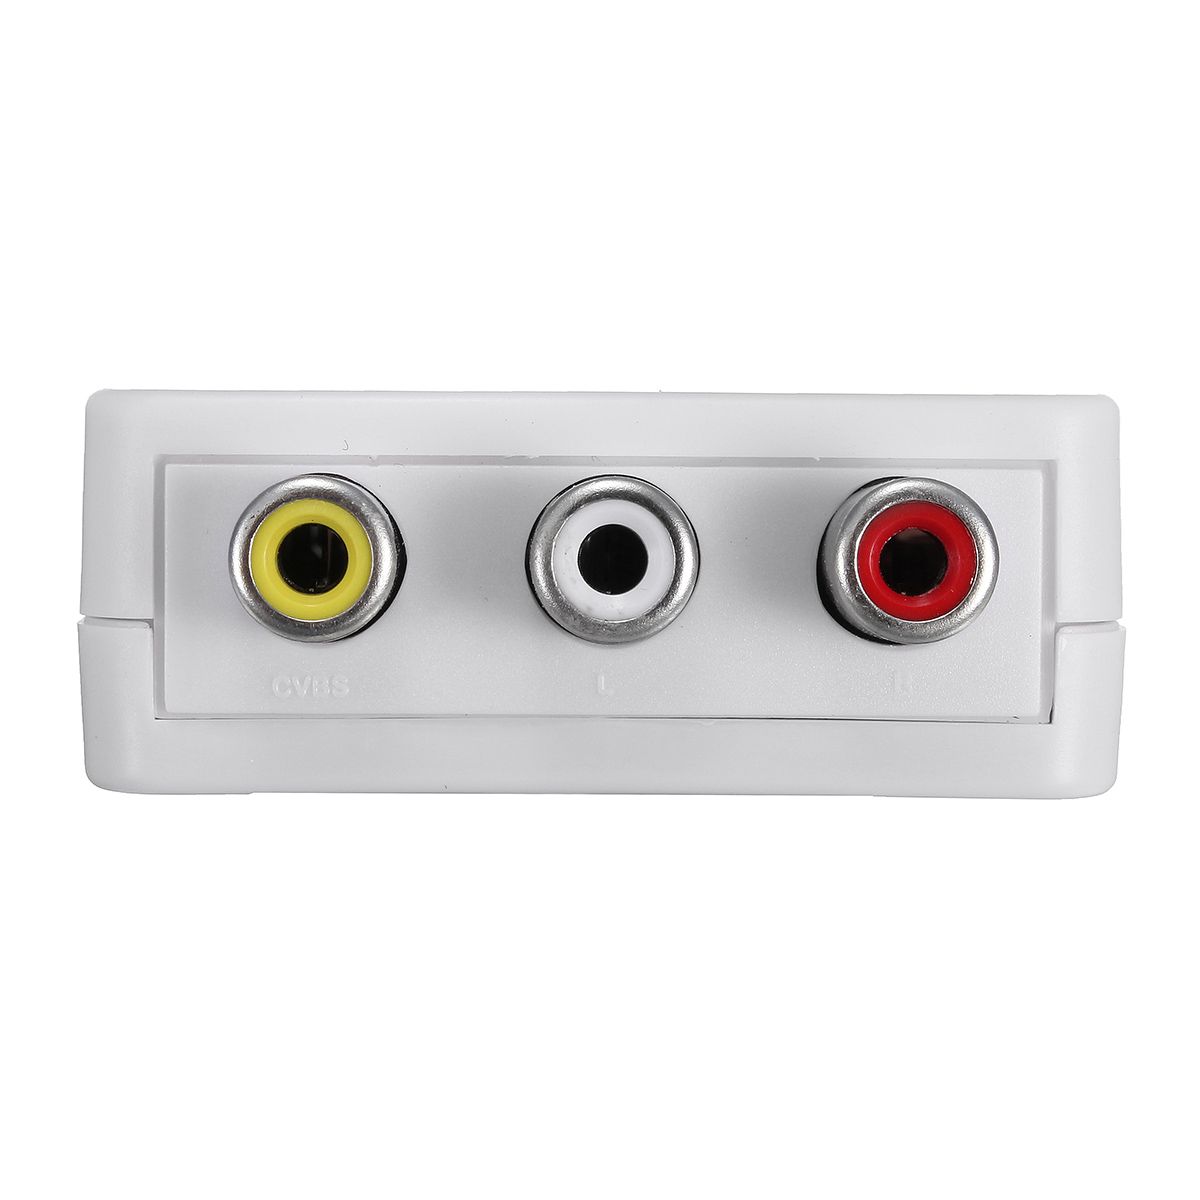 Mini-PAL-to-NTSC-TV-Video-System-Bi-directional-Converter-Switch-Adapter-1118622